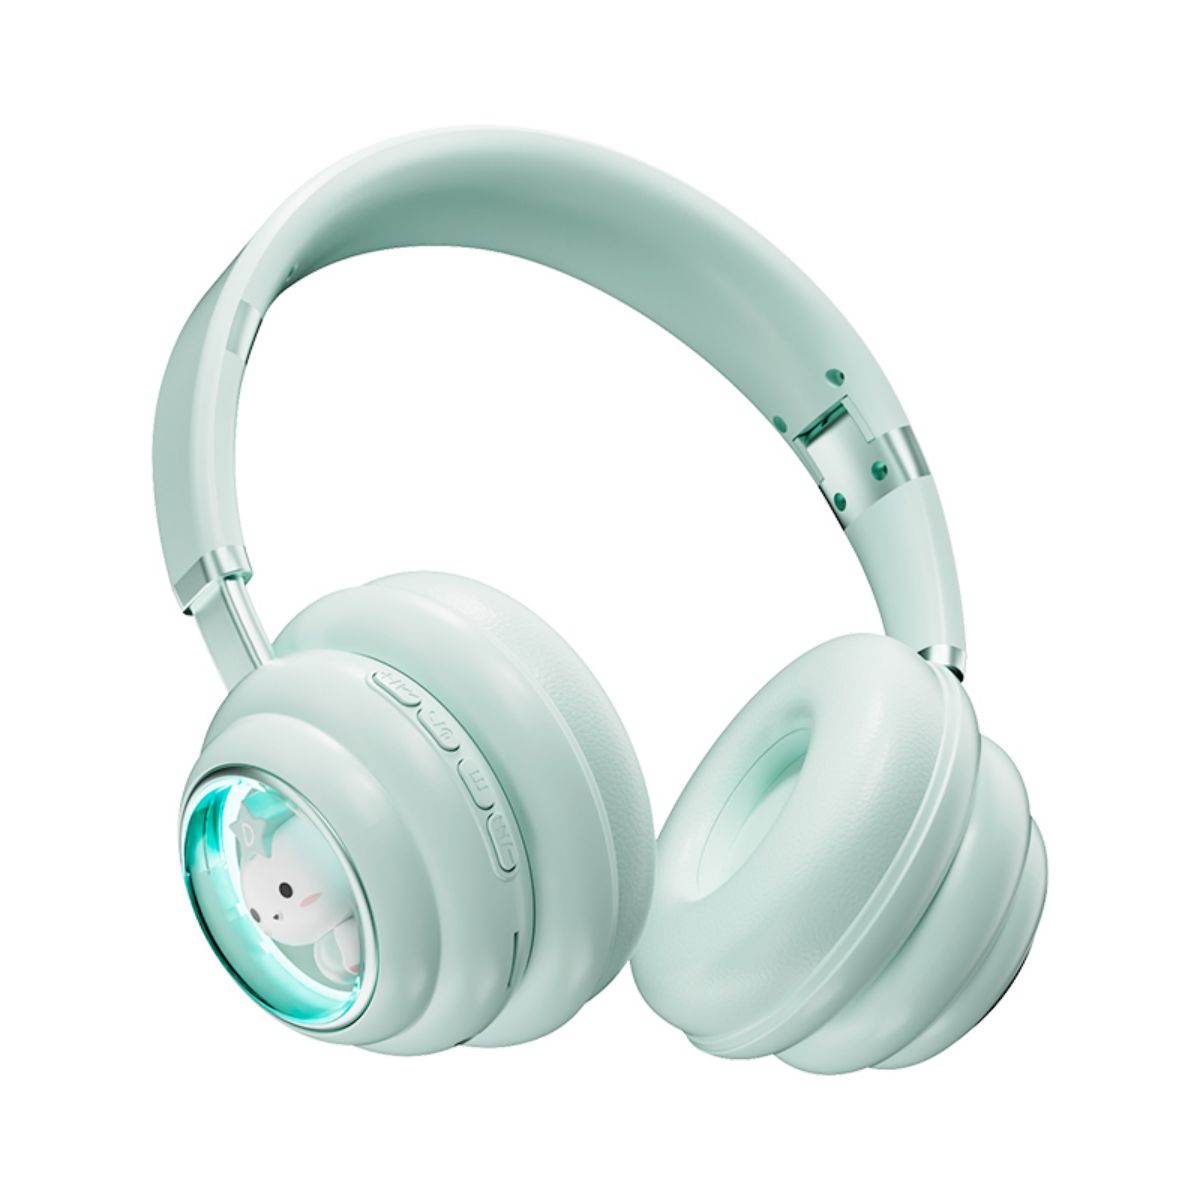 KE-30 Wireless Headphones – a perfect gift for Kids.